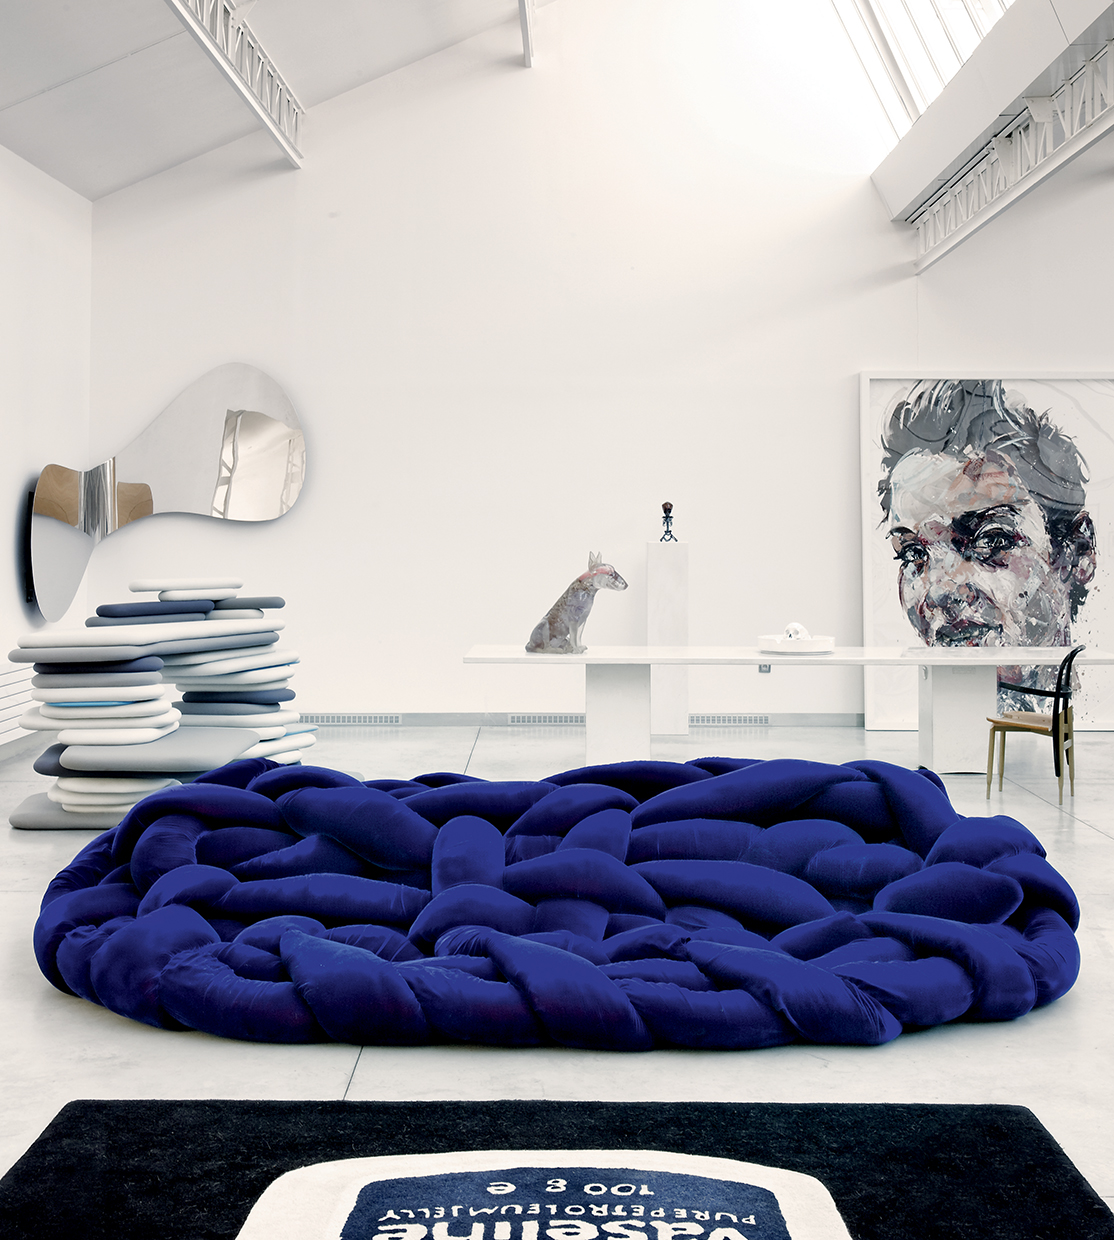 The Boa 'living lounge' designed by Fernando and Humberto Campana. Photo c/o Edra. 